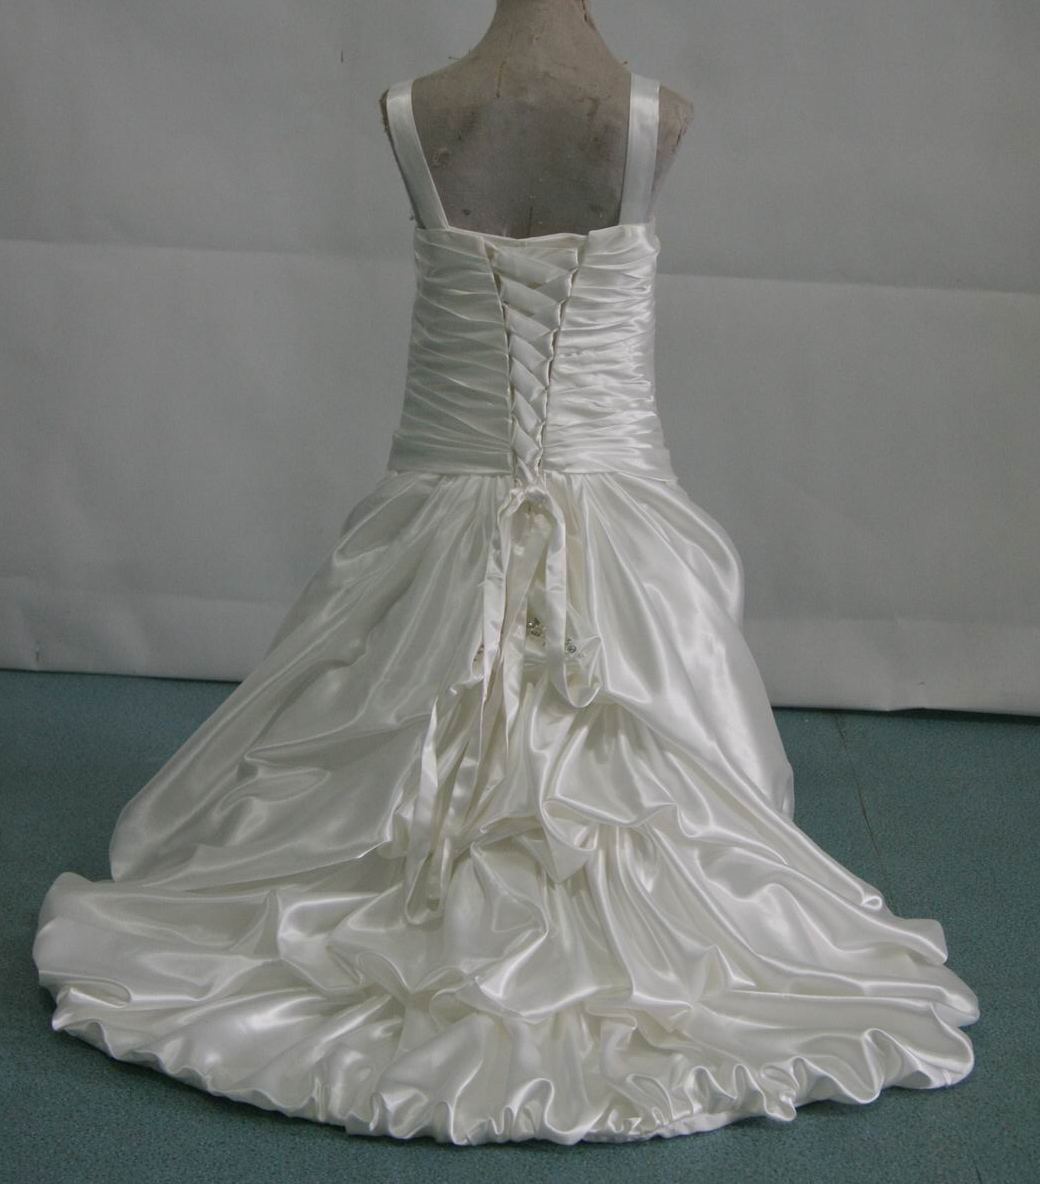 Miniature wedding ball gown with balloon skirt